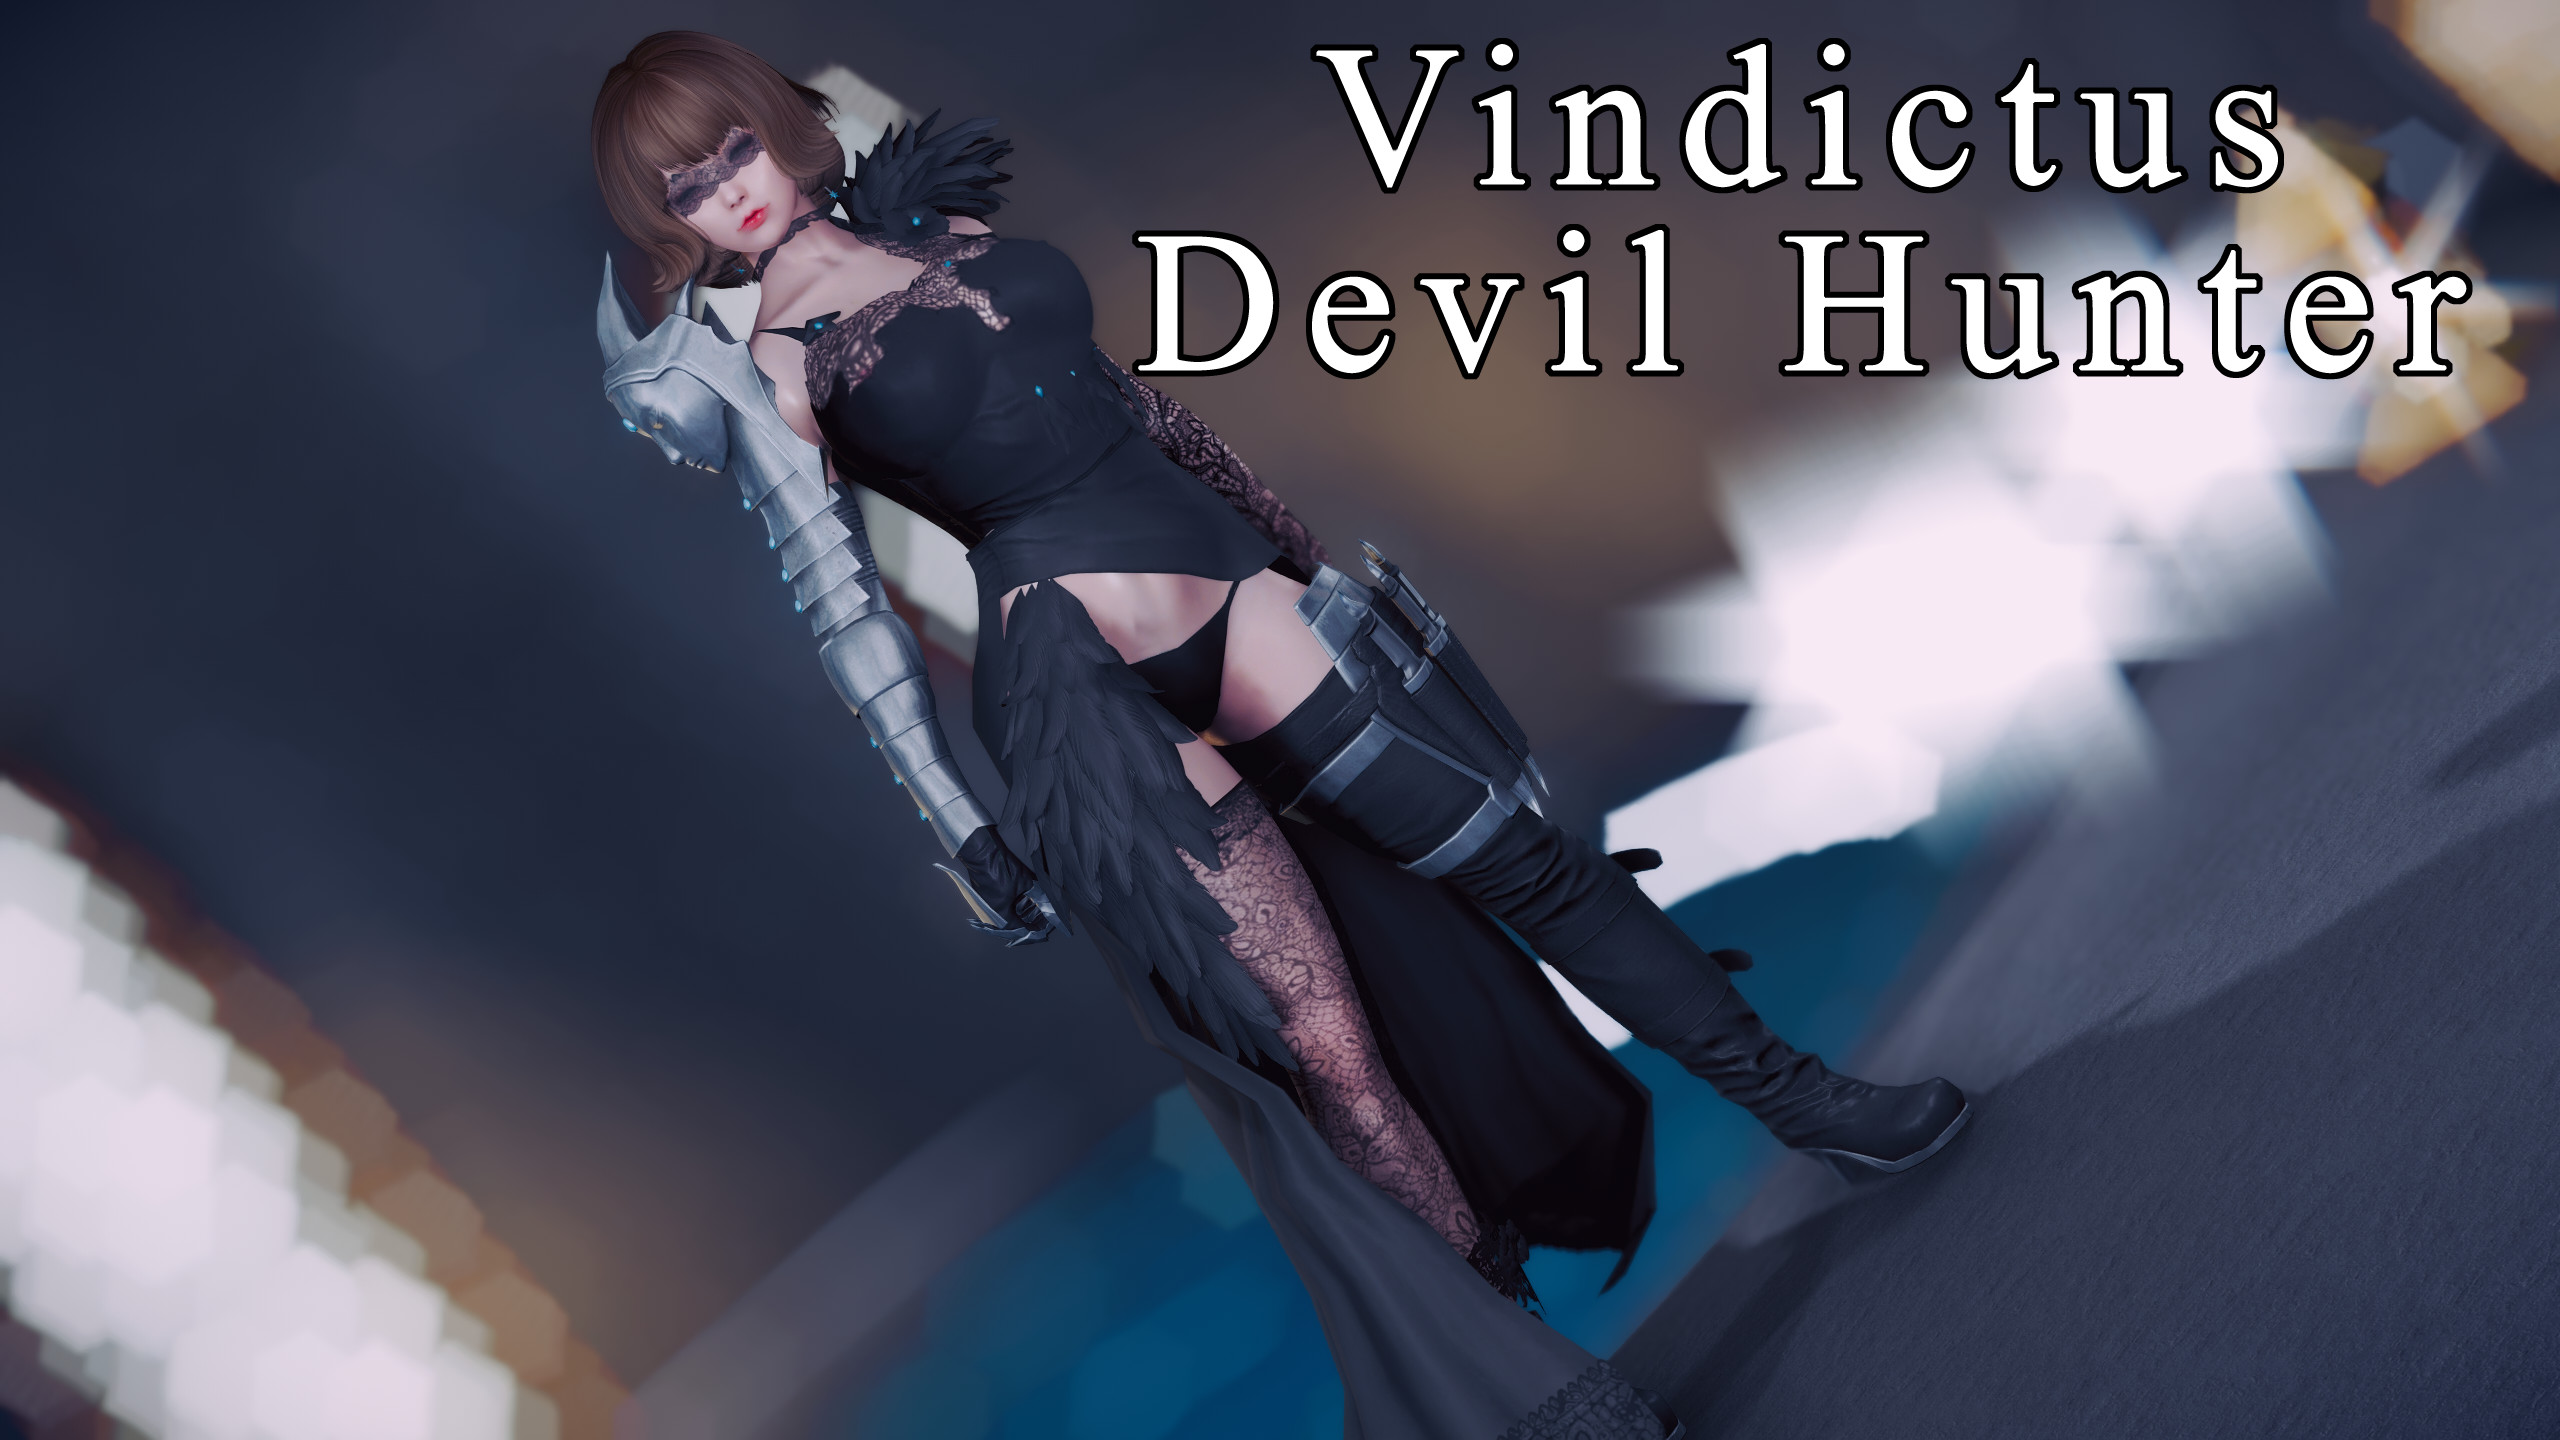 Vindictus Devil Hunter